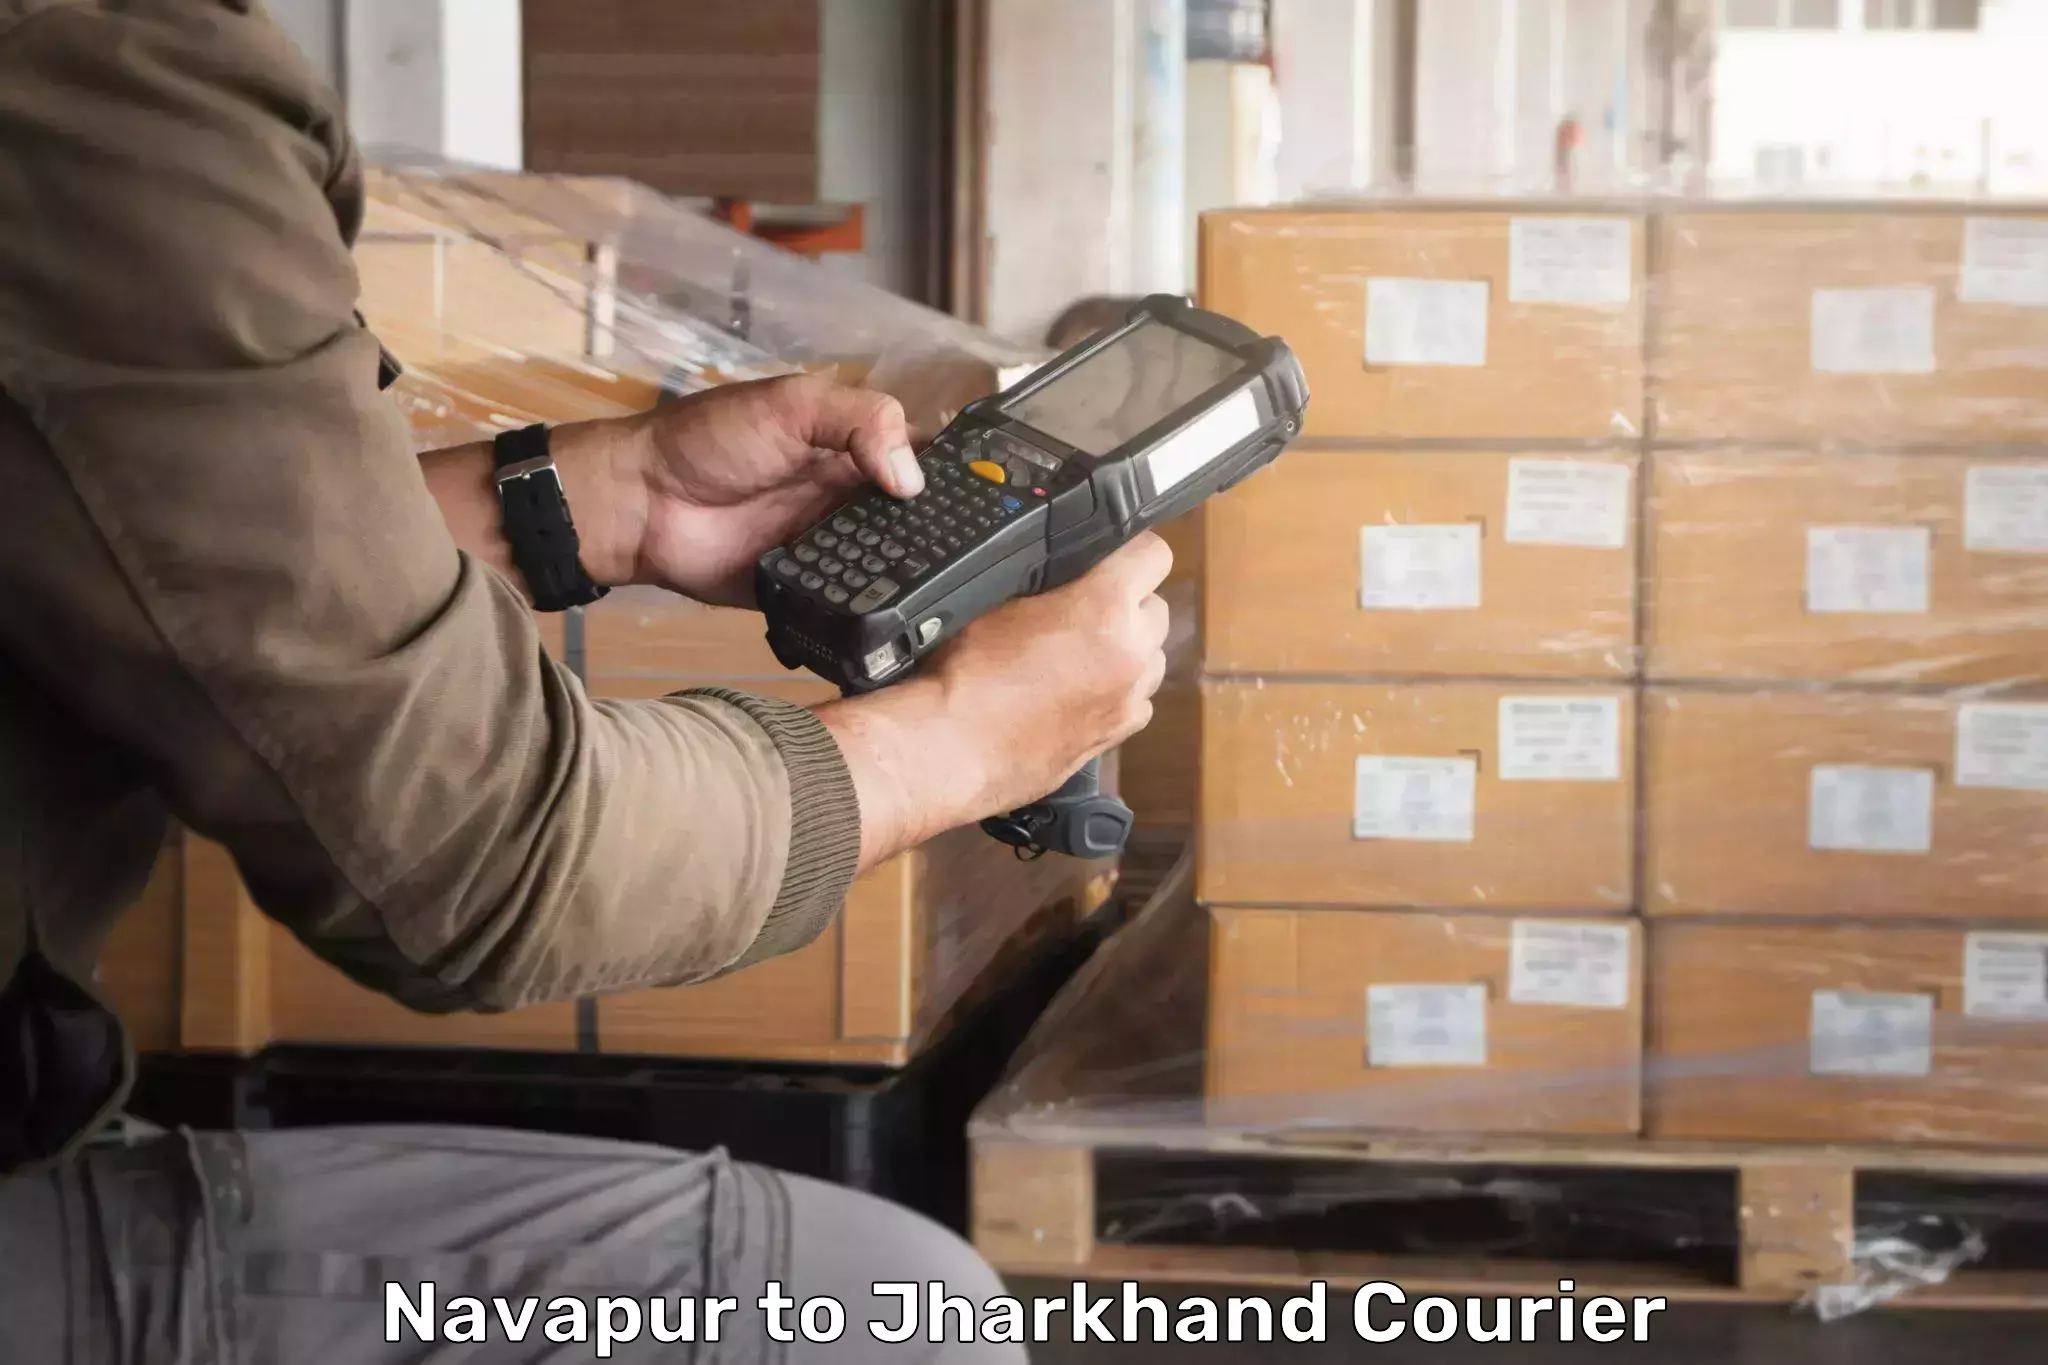 Quality courier services in Navapur to Nagar Untari